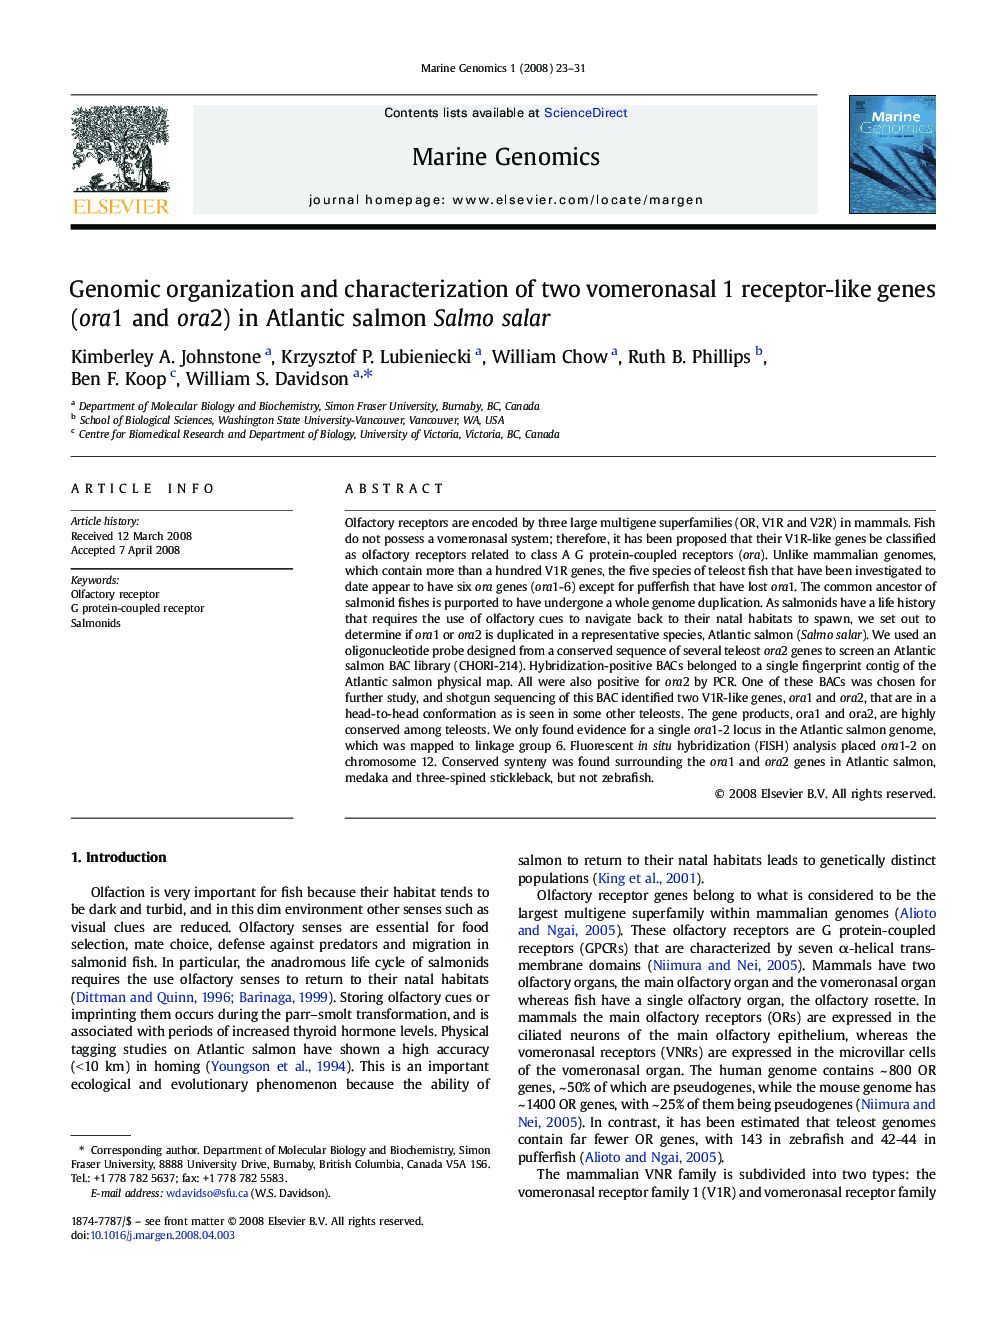 Genomic organization and characterization of two vomeronasal 1 receptor-like genes (ora1 and ora2) in Atlantic salmon Salmo salar